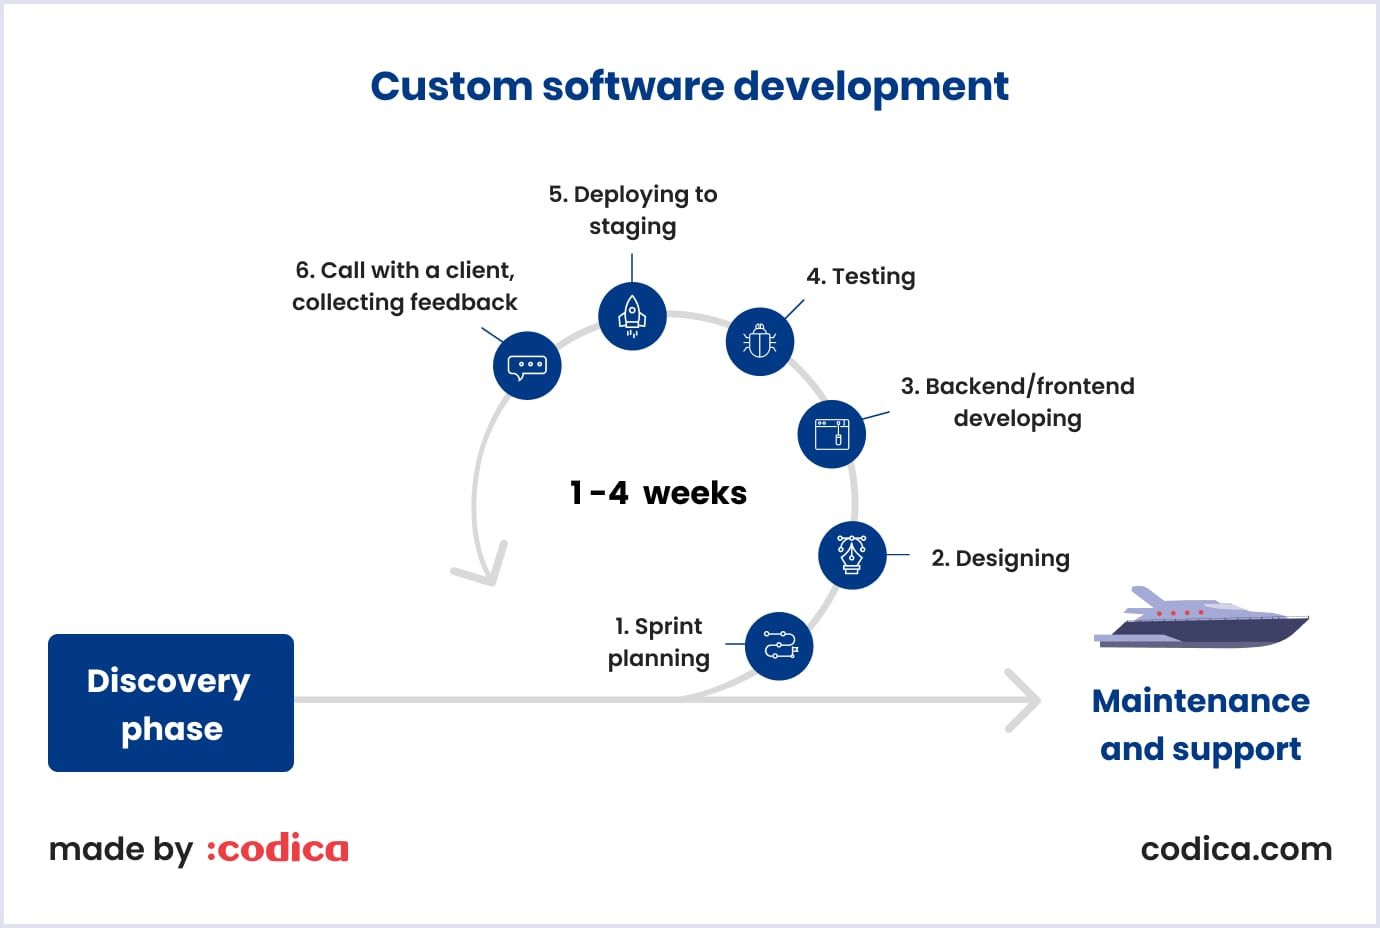 Software development process at Codica